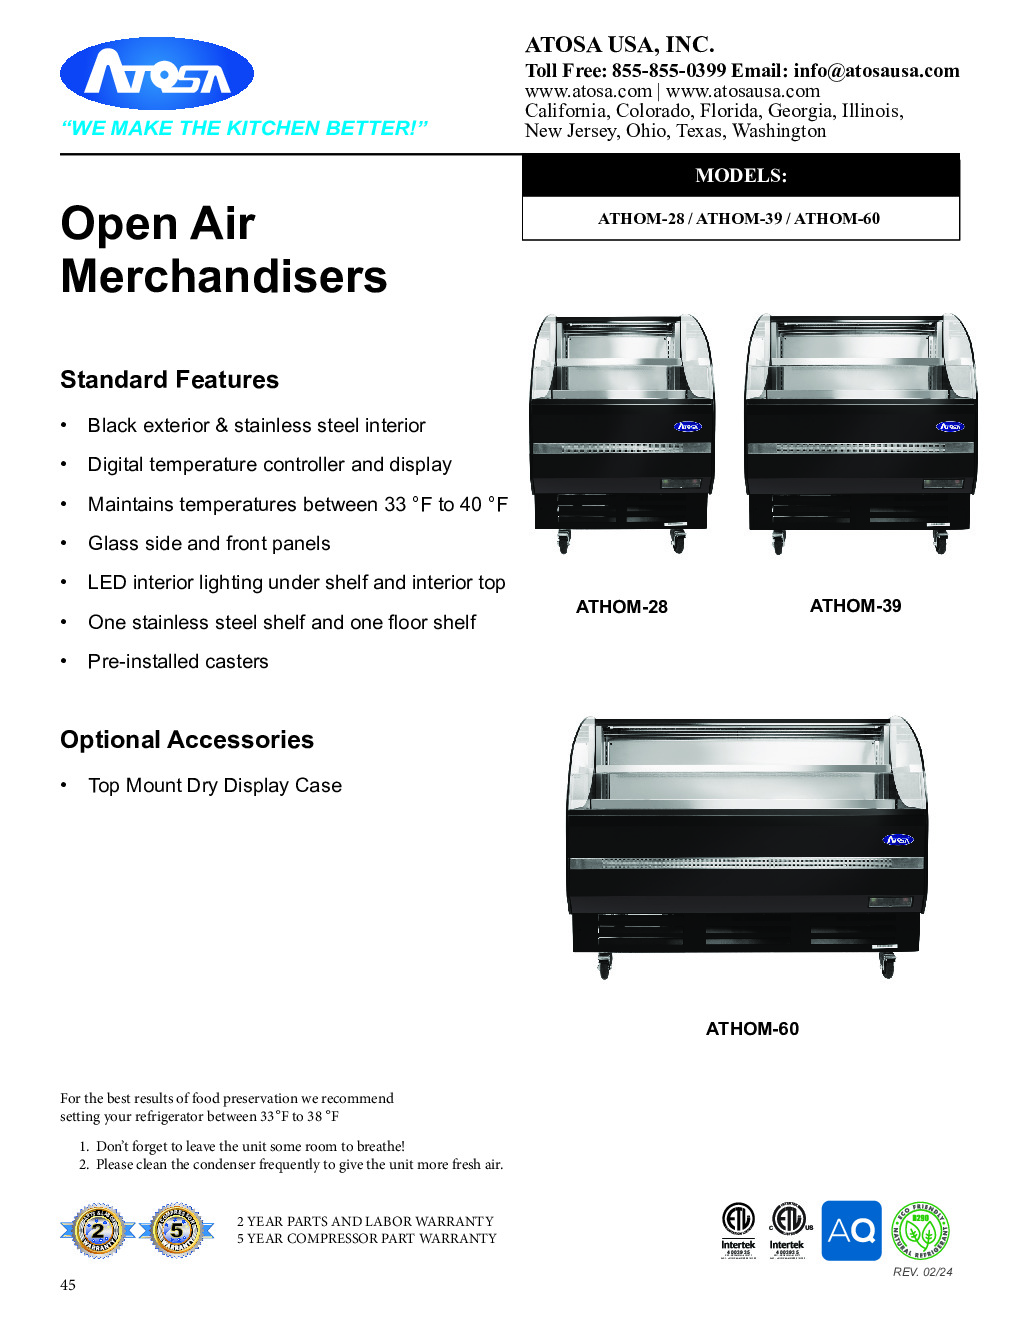 Atosa USA ATHOM-39 Open Refrigerated Display Merchandiser